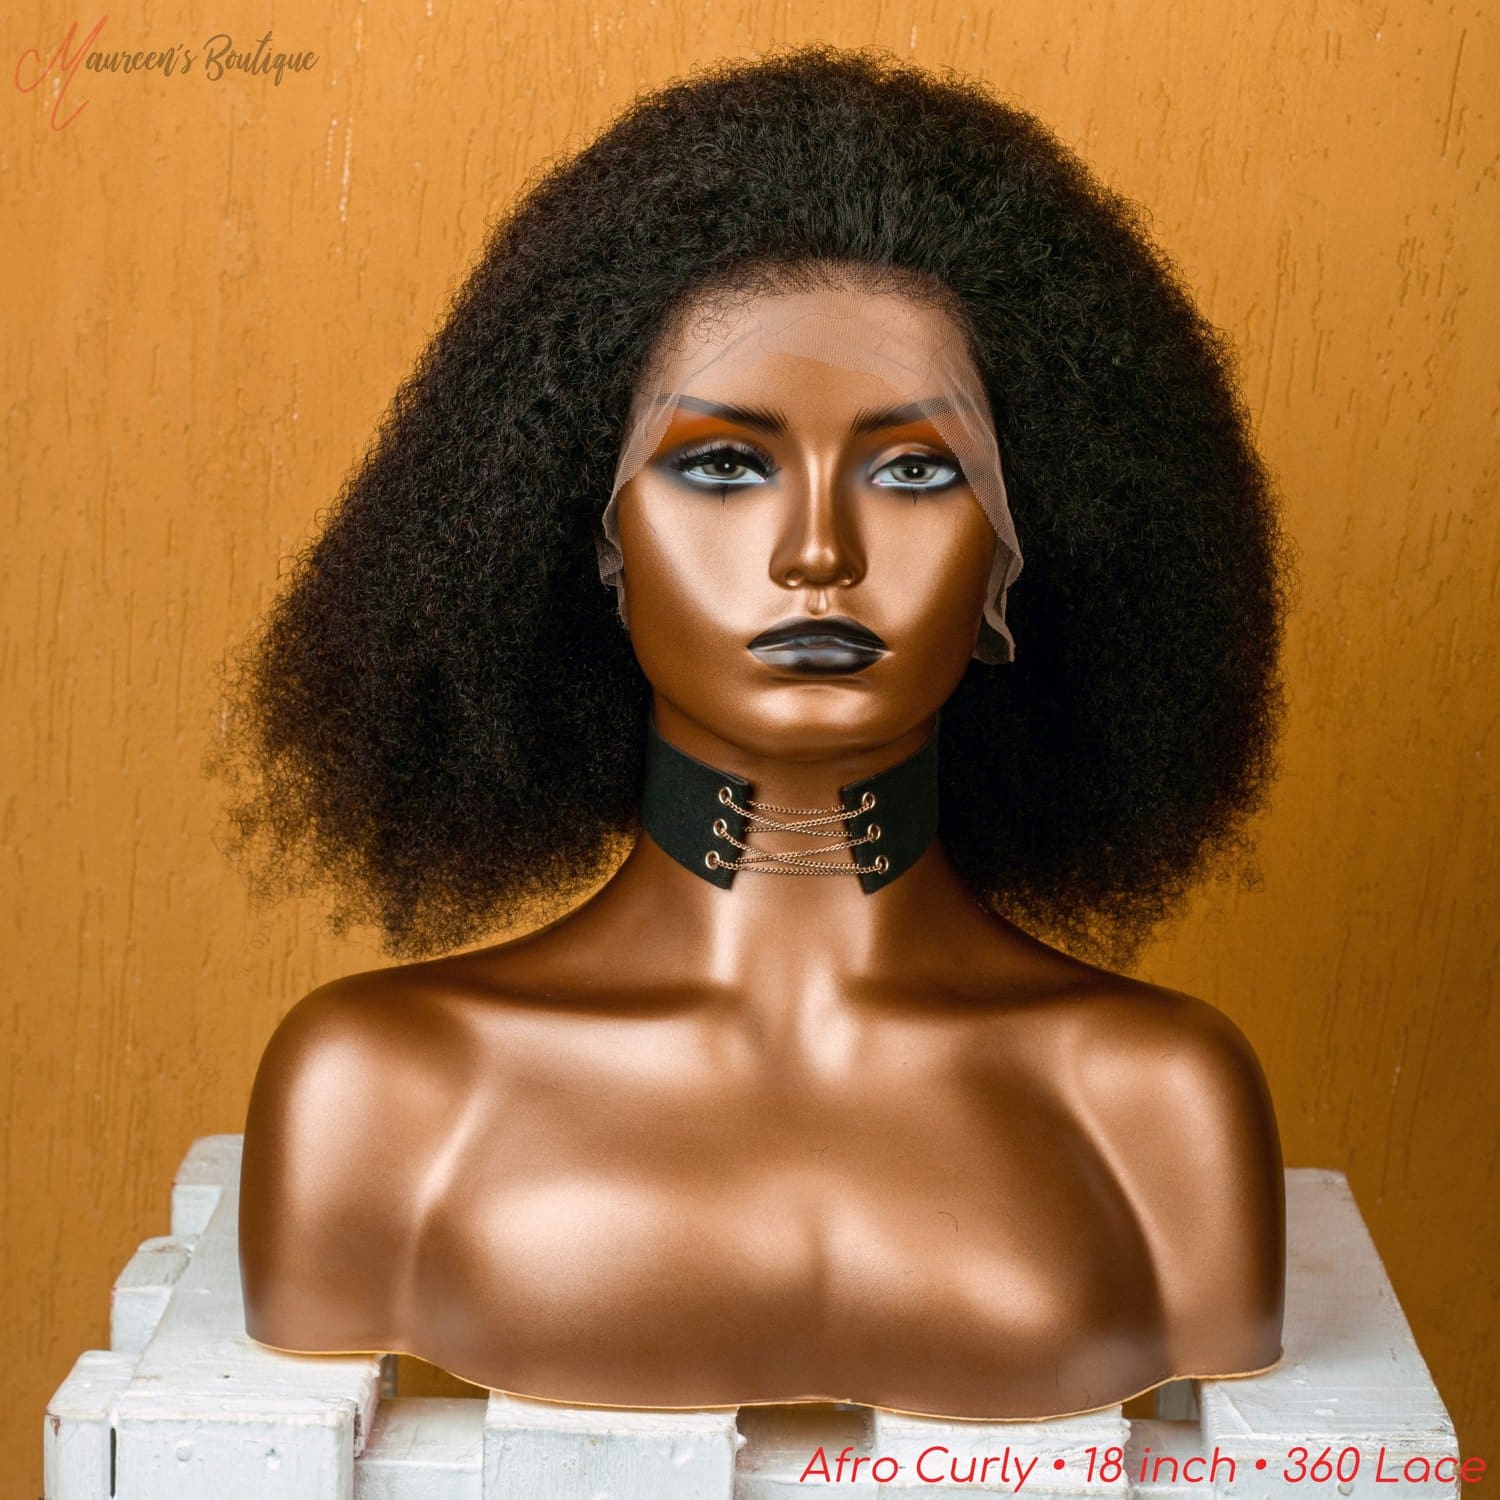 Afro Curly 360 human hair wig 18 inch maureens.com 1